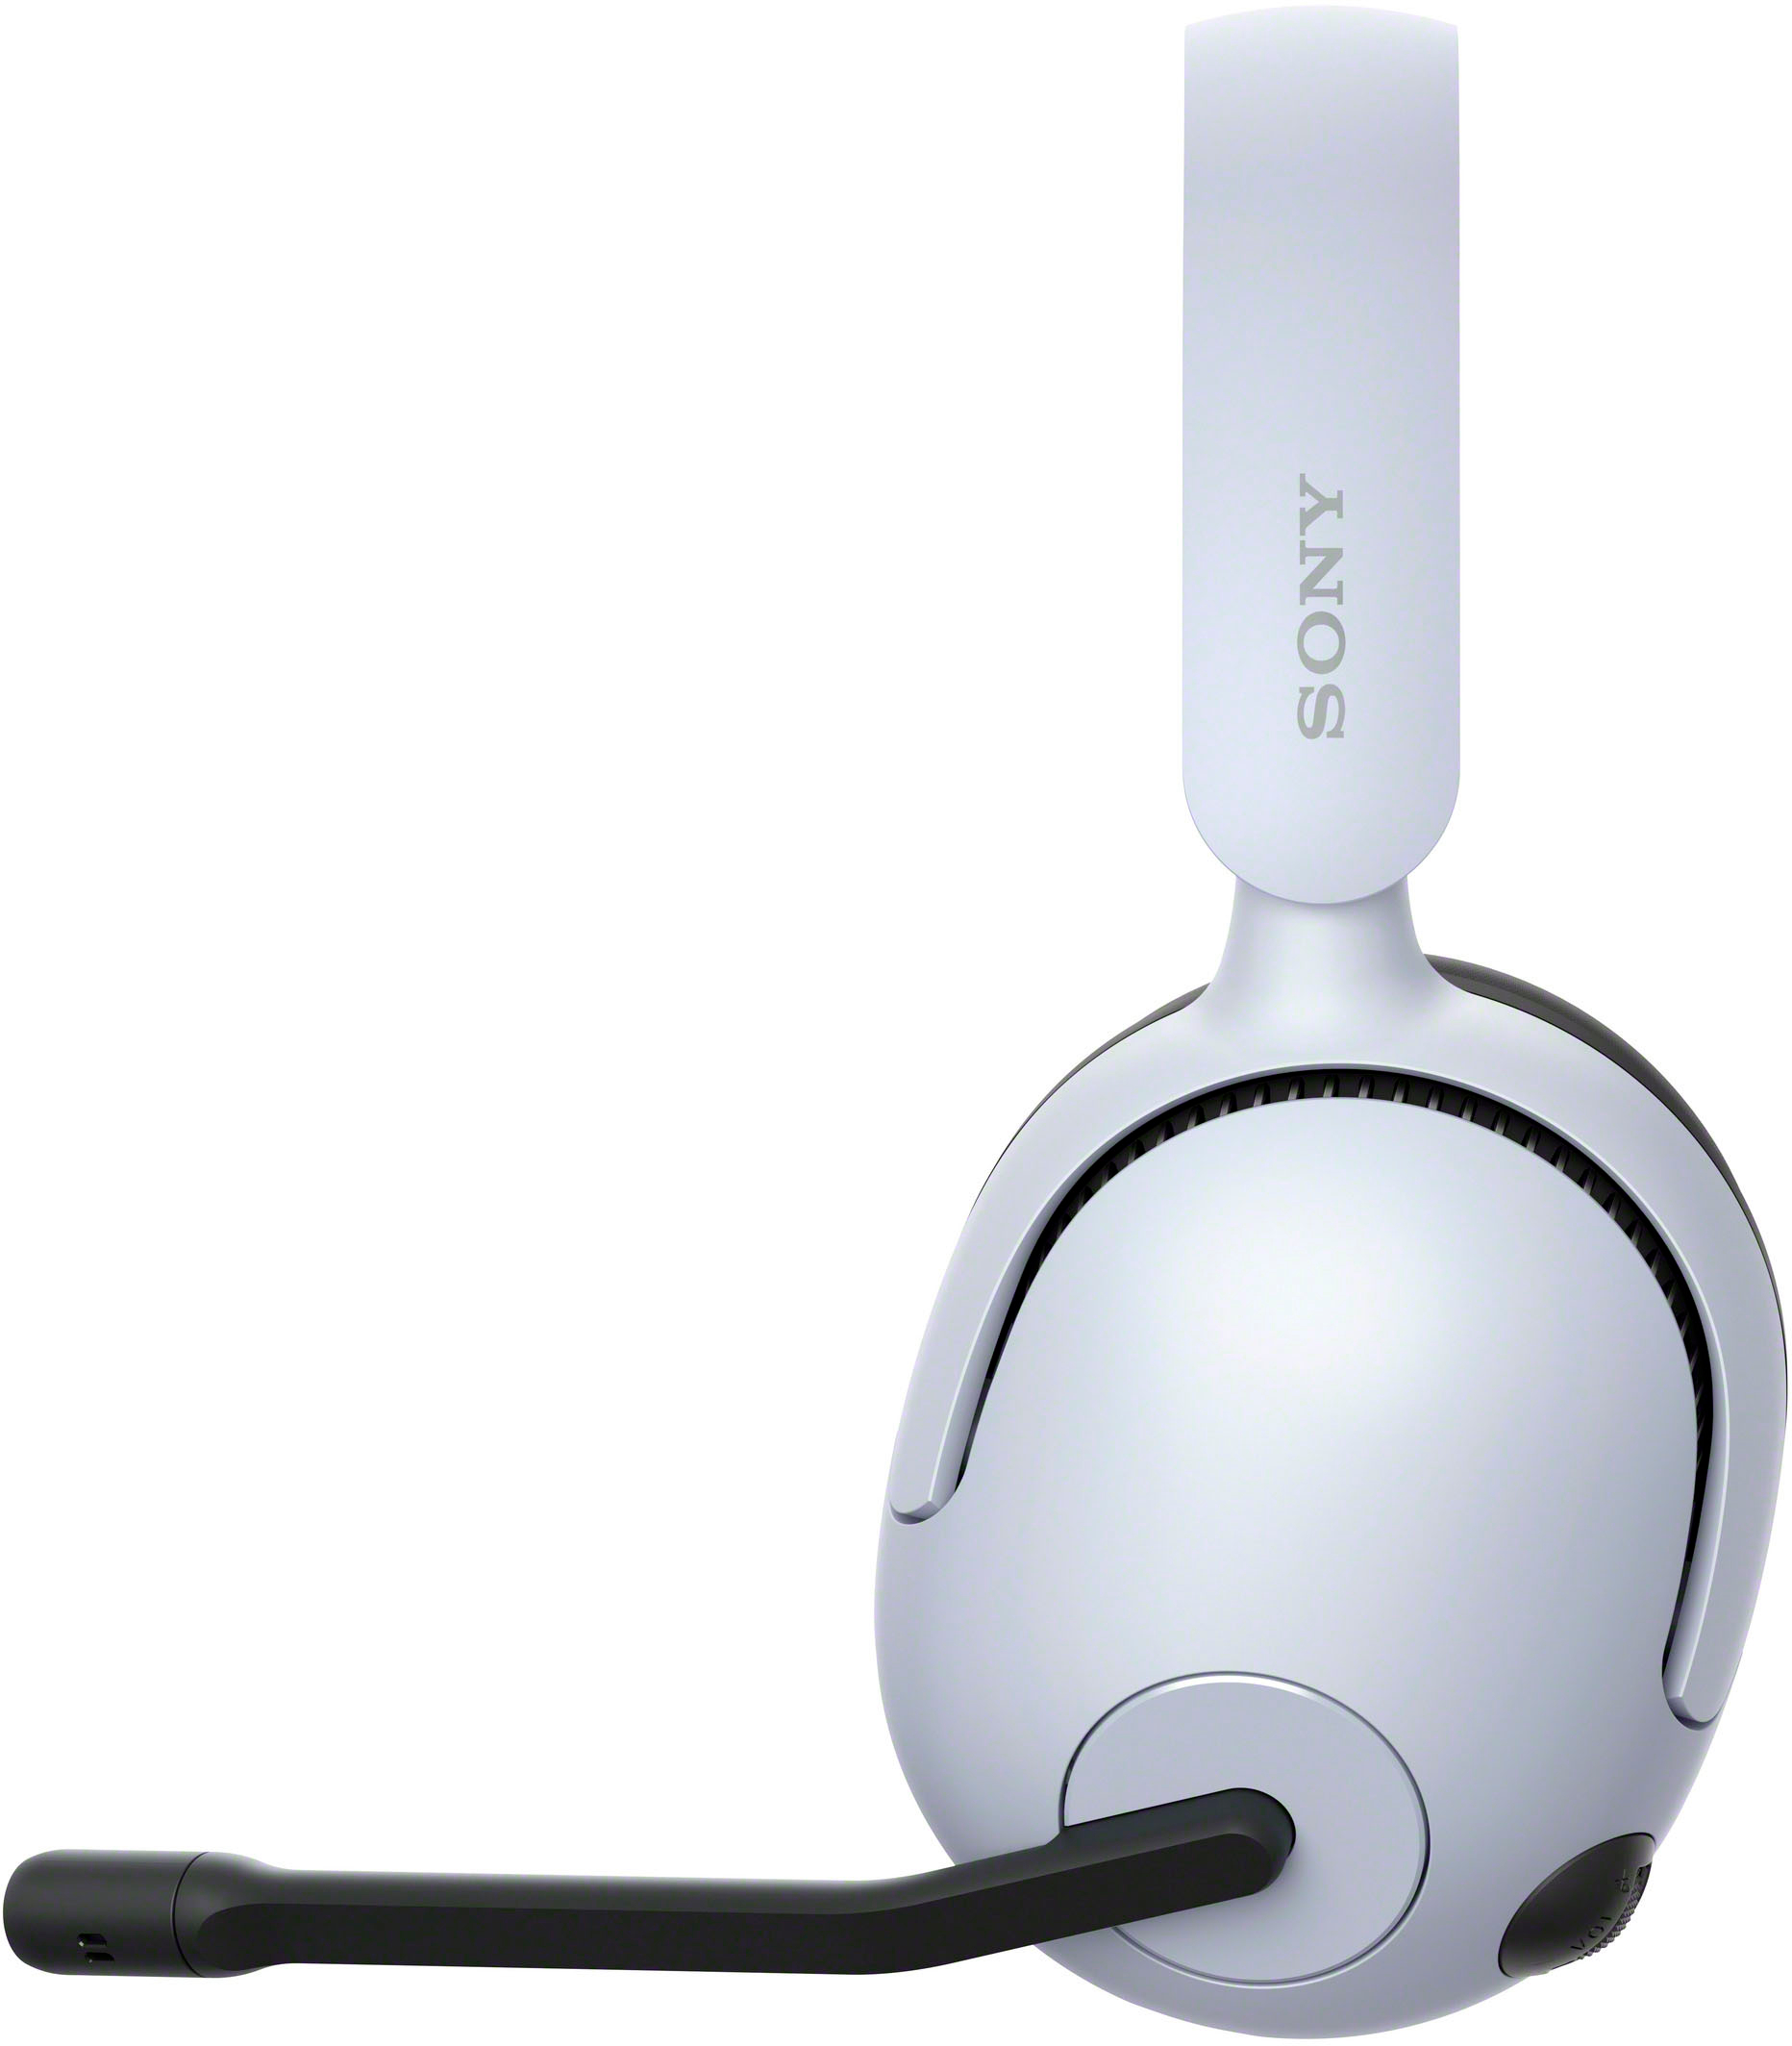 Sony INZONE H5 Wireless Gaming Headset White WHG500/W - Best Buy